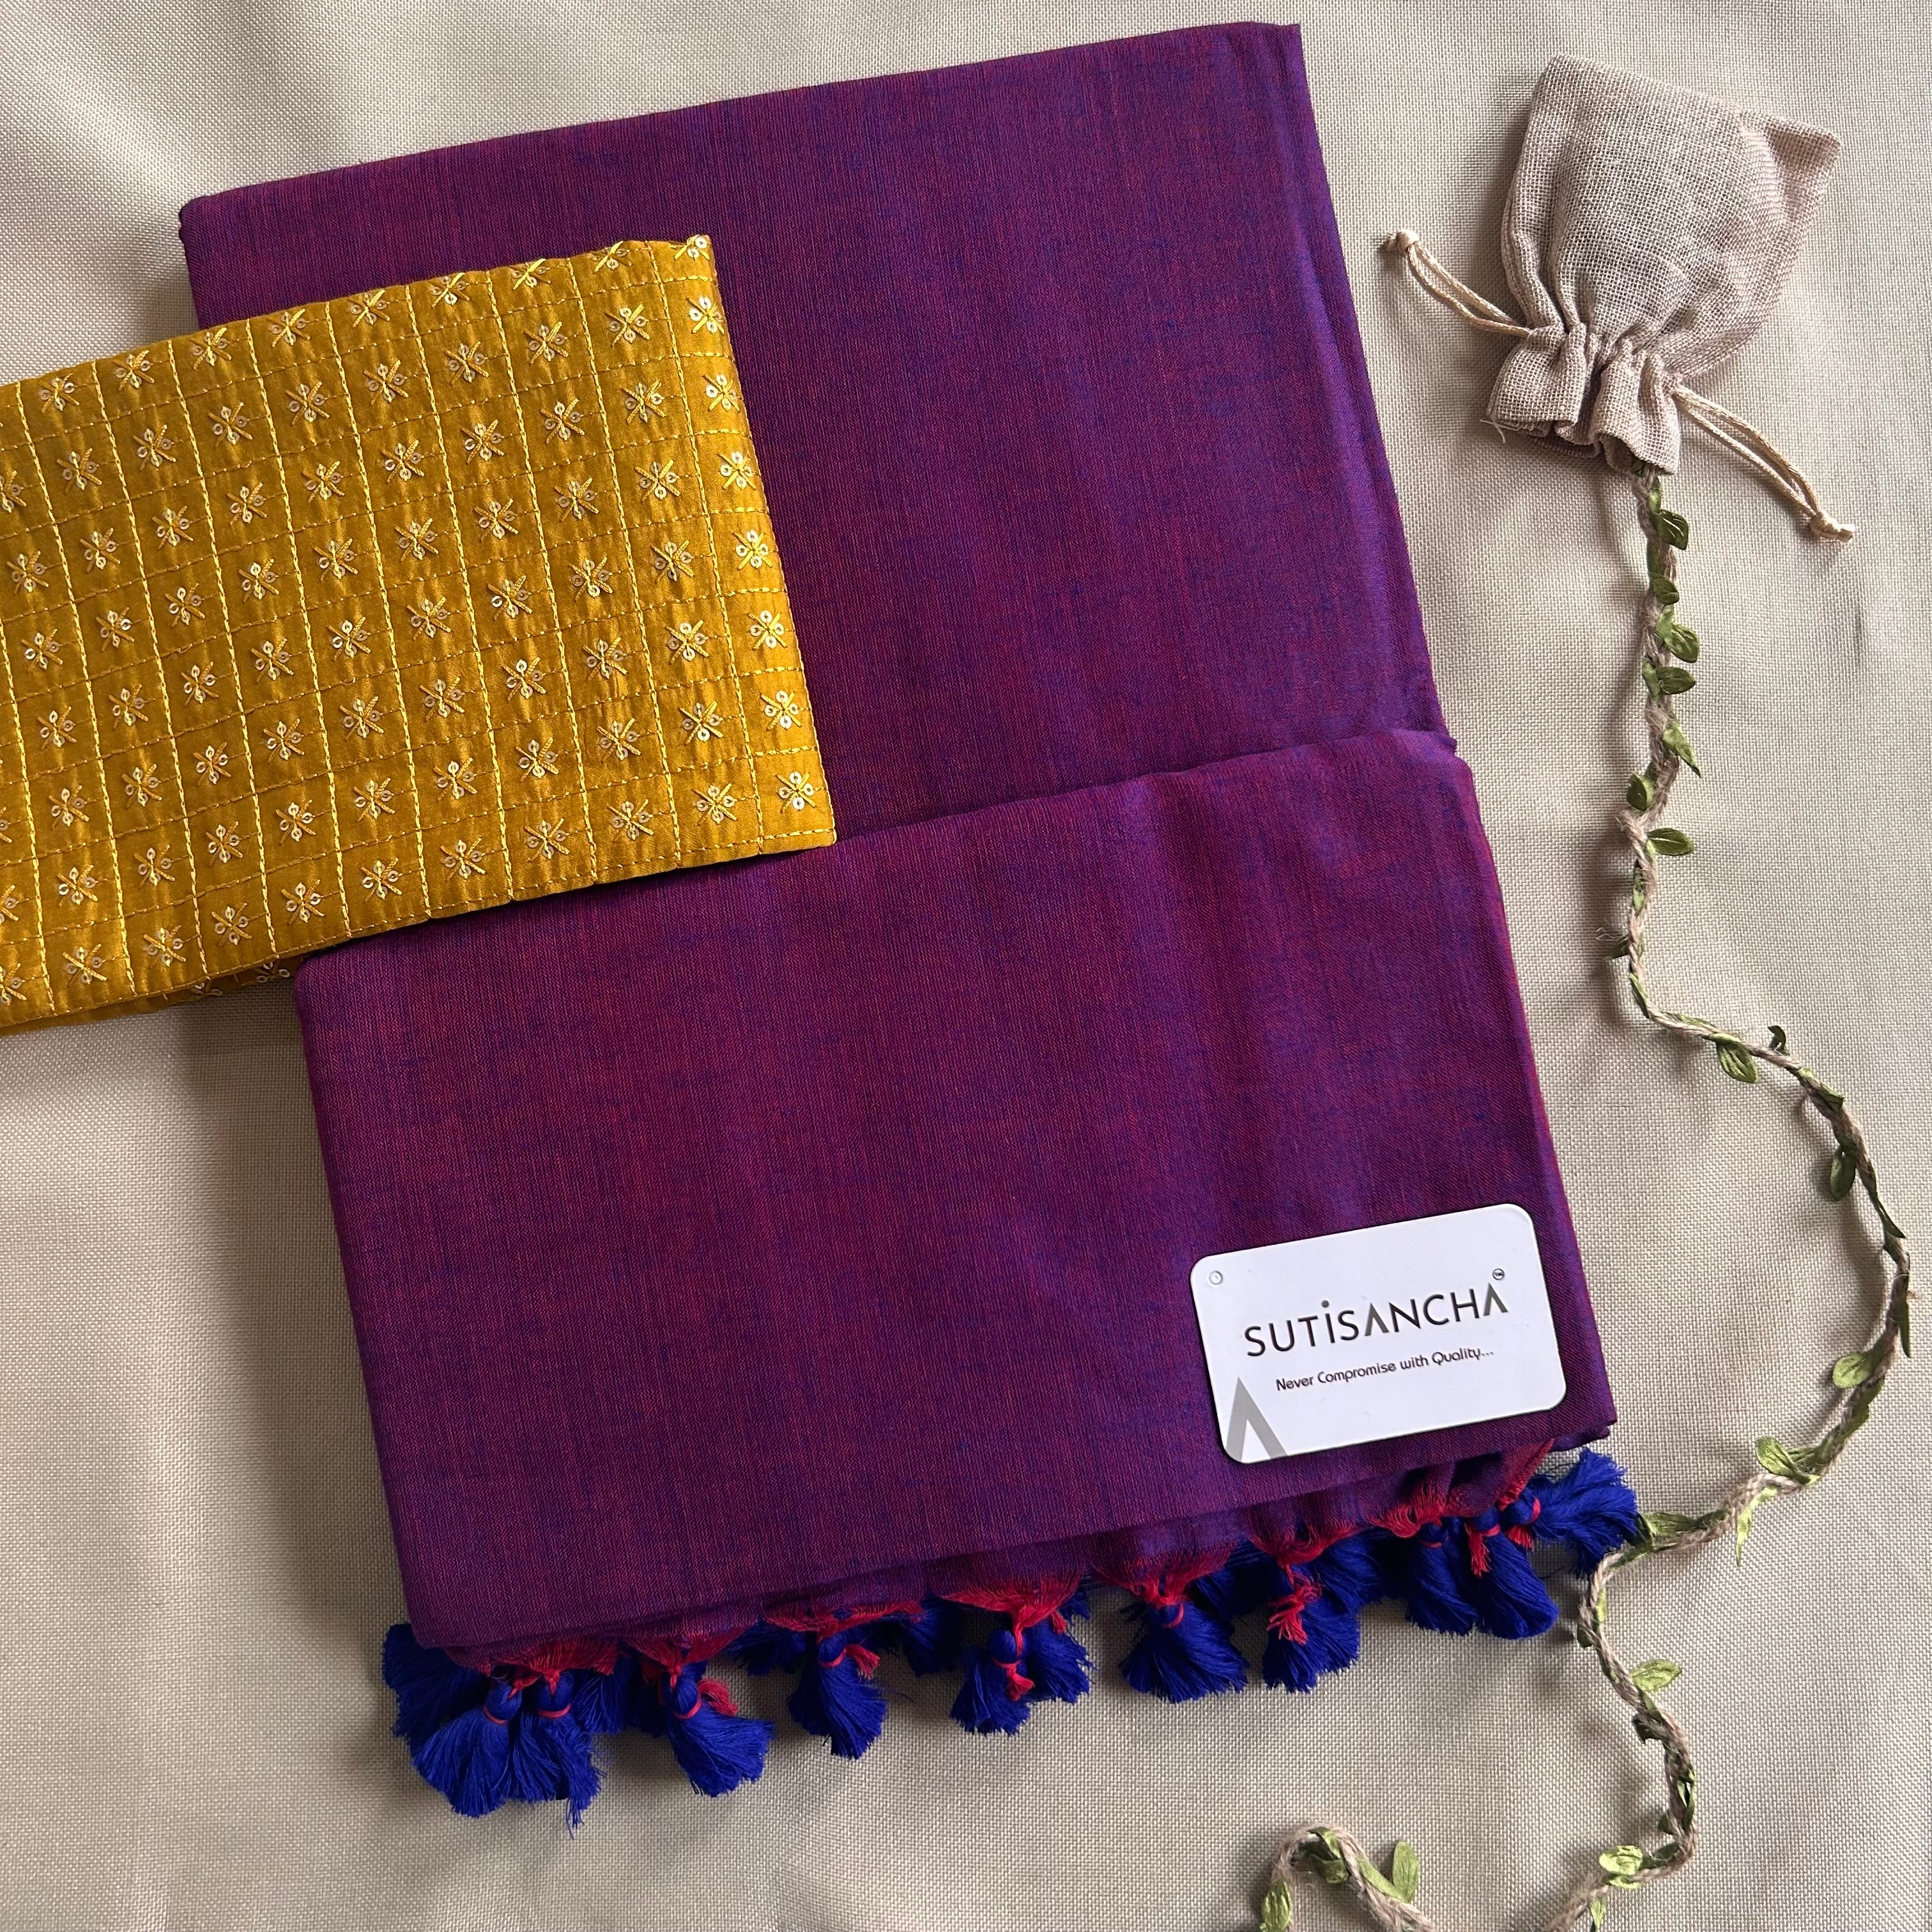 Sutisancha Plum purple cotton Saree designer work Blouse